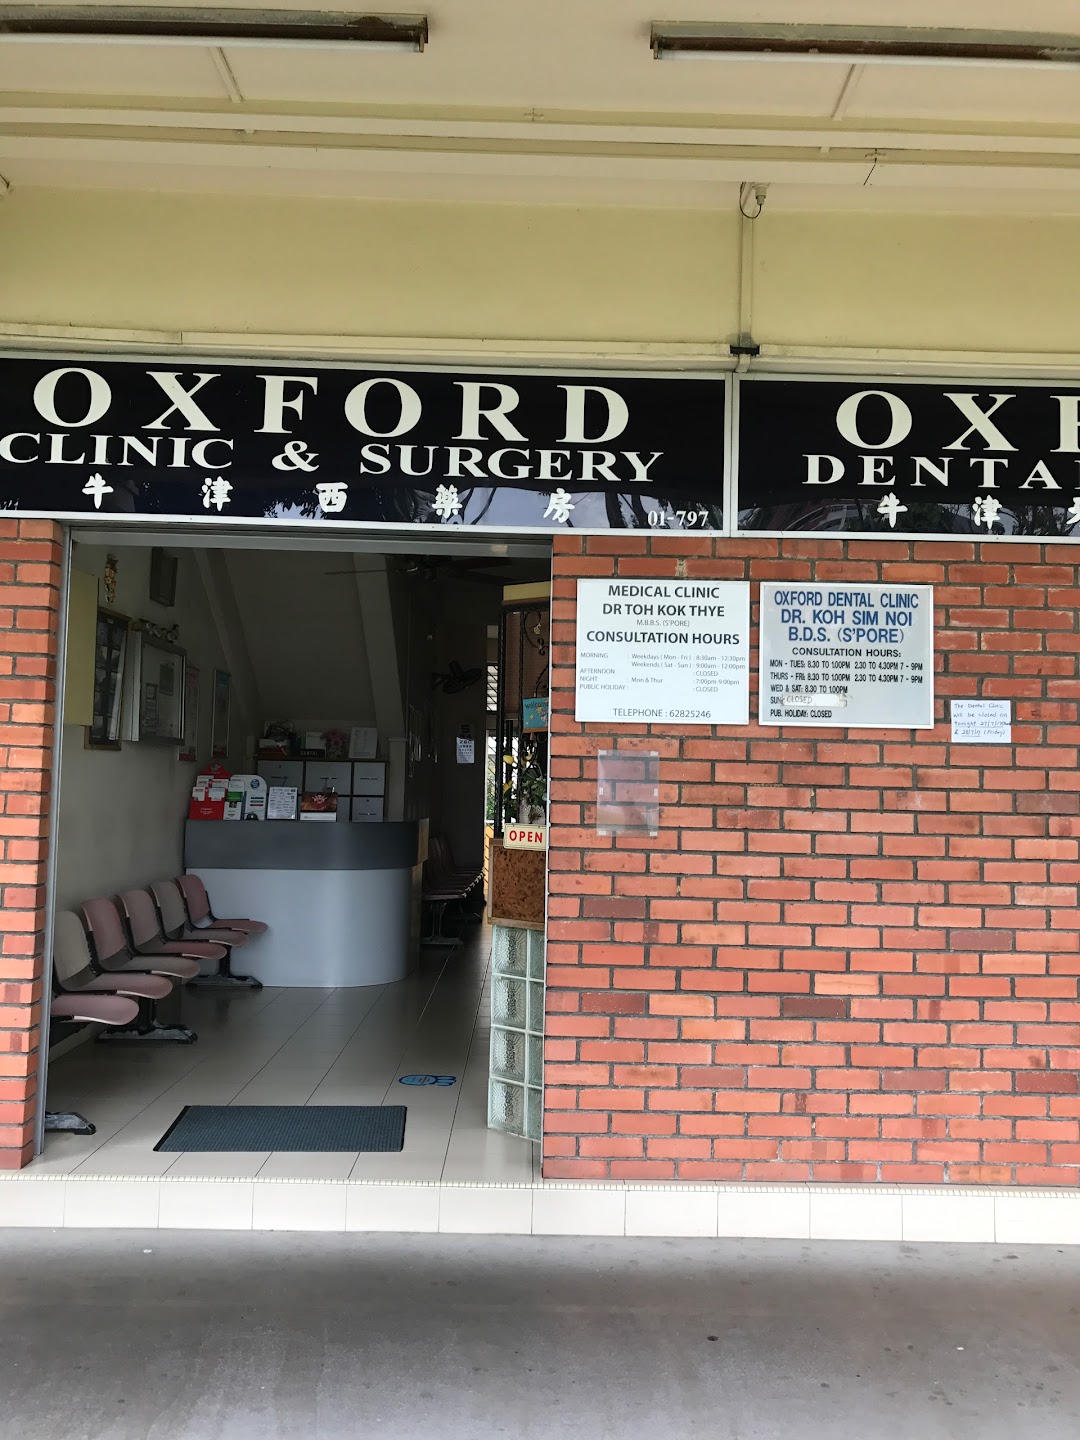 Oxford Dental Clinic